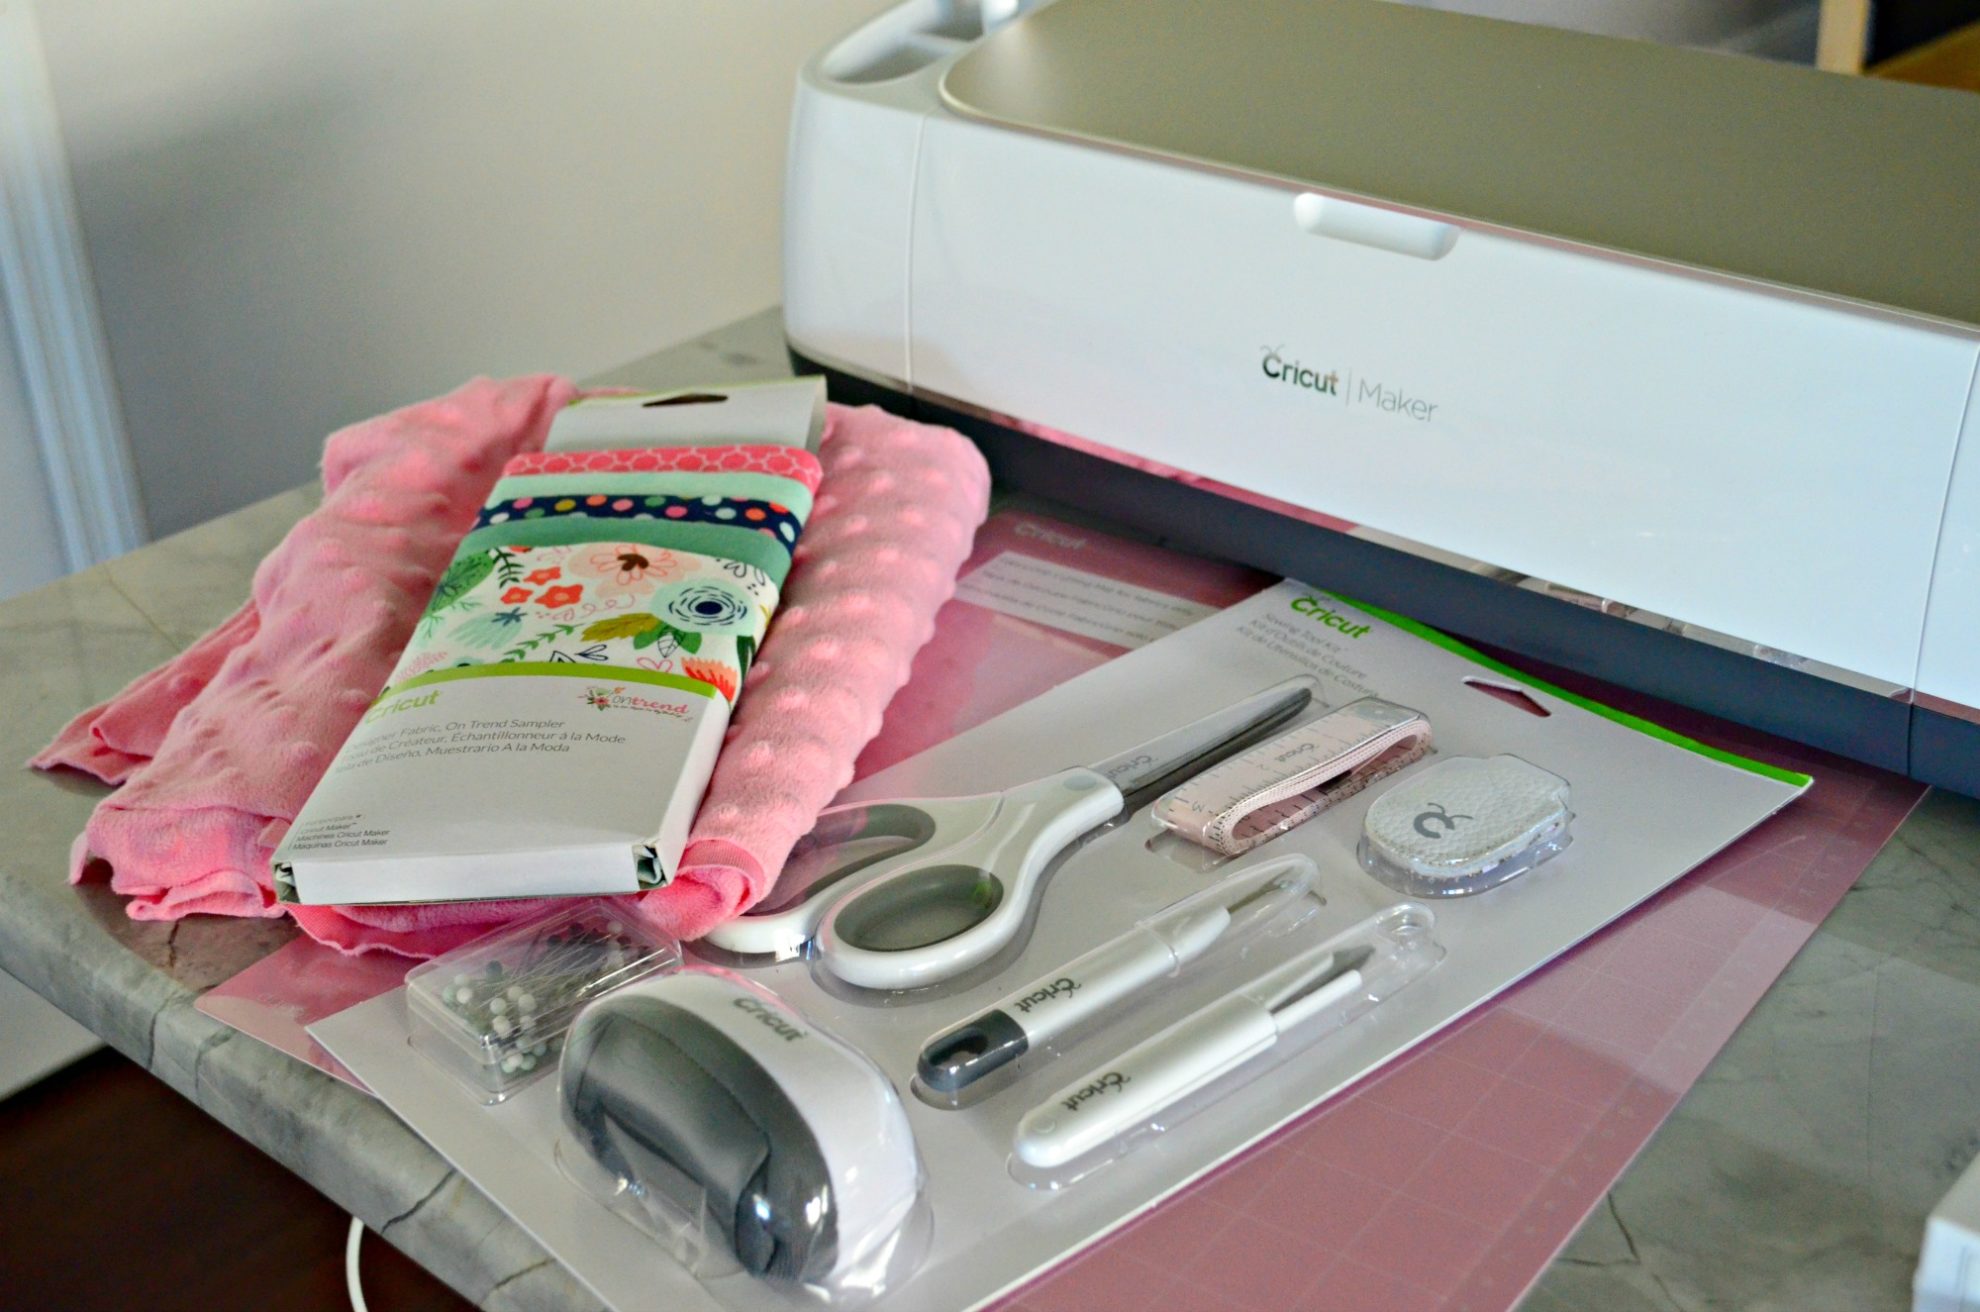 supplies on countertop: fabric, Cricut Maker, pink mat, and sewing supplies.